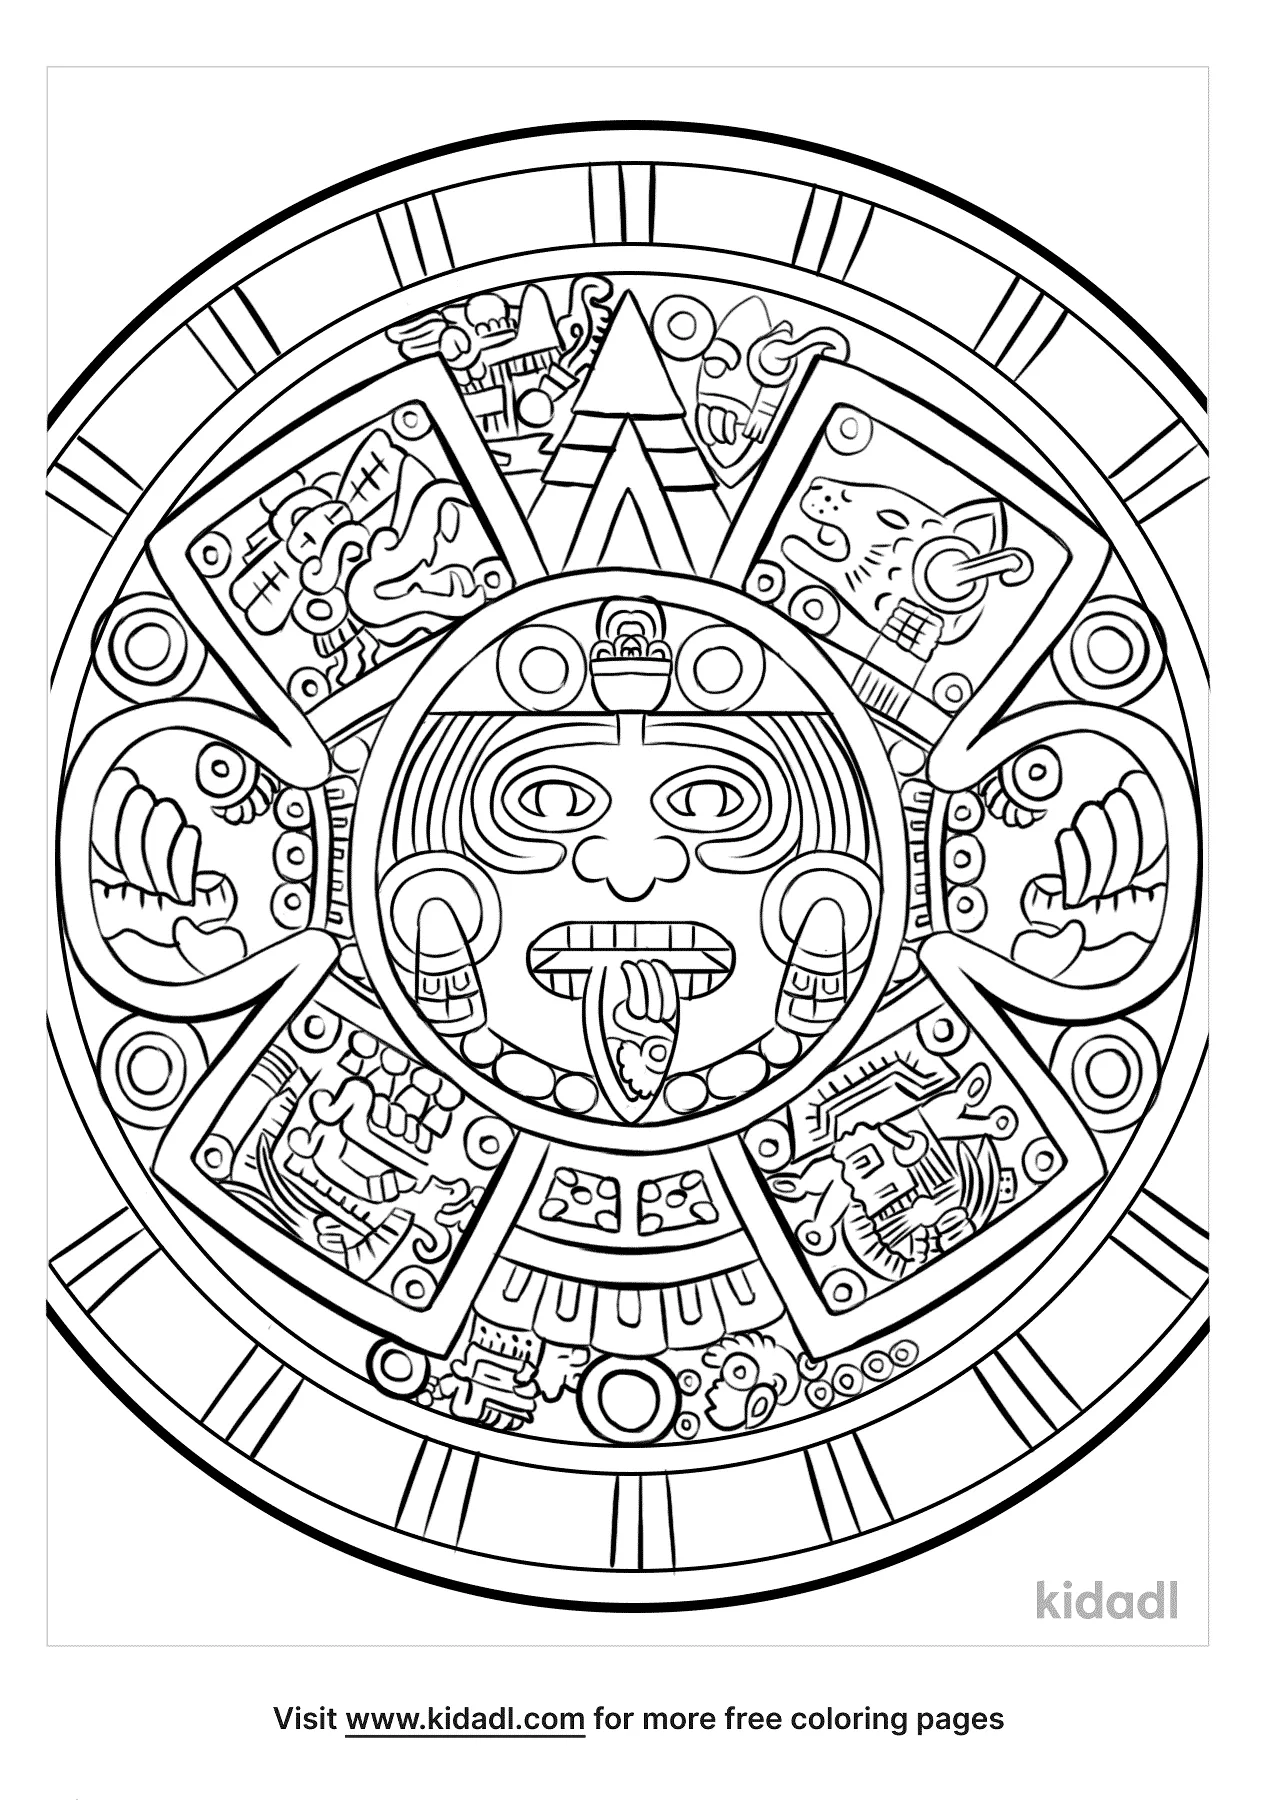 Free Aztec Calendar Coloring Page Coloring Page Printables Kidadl